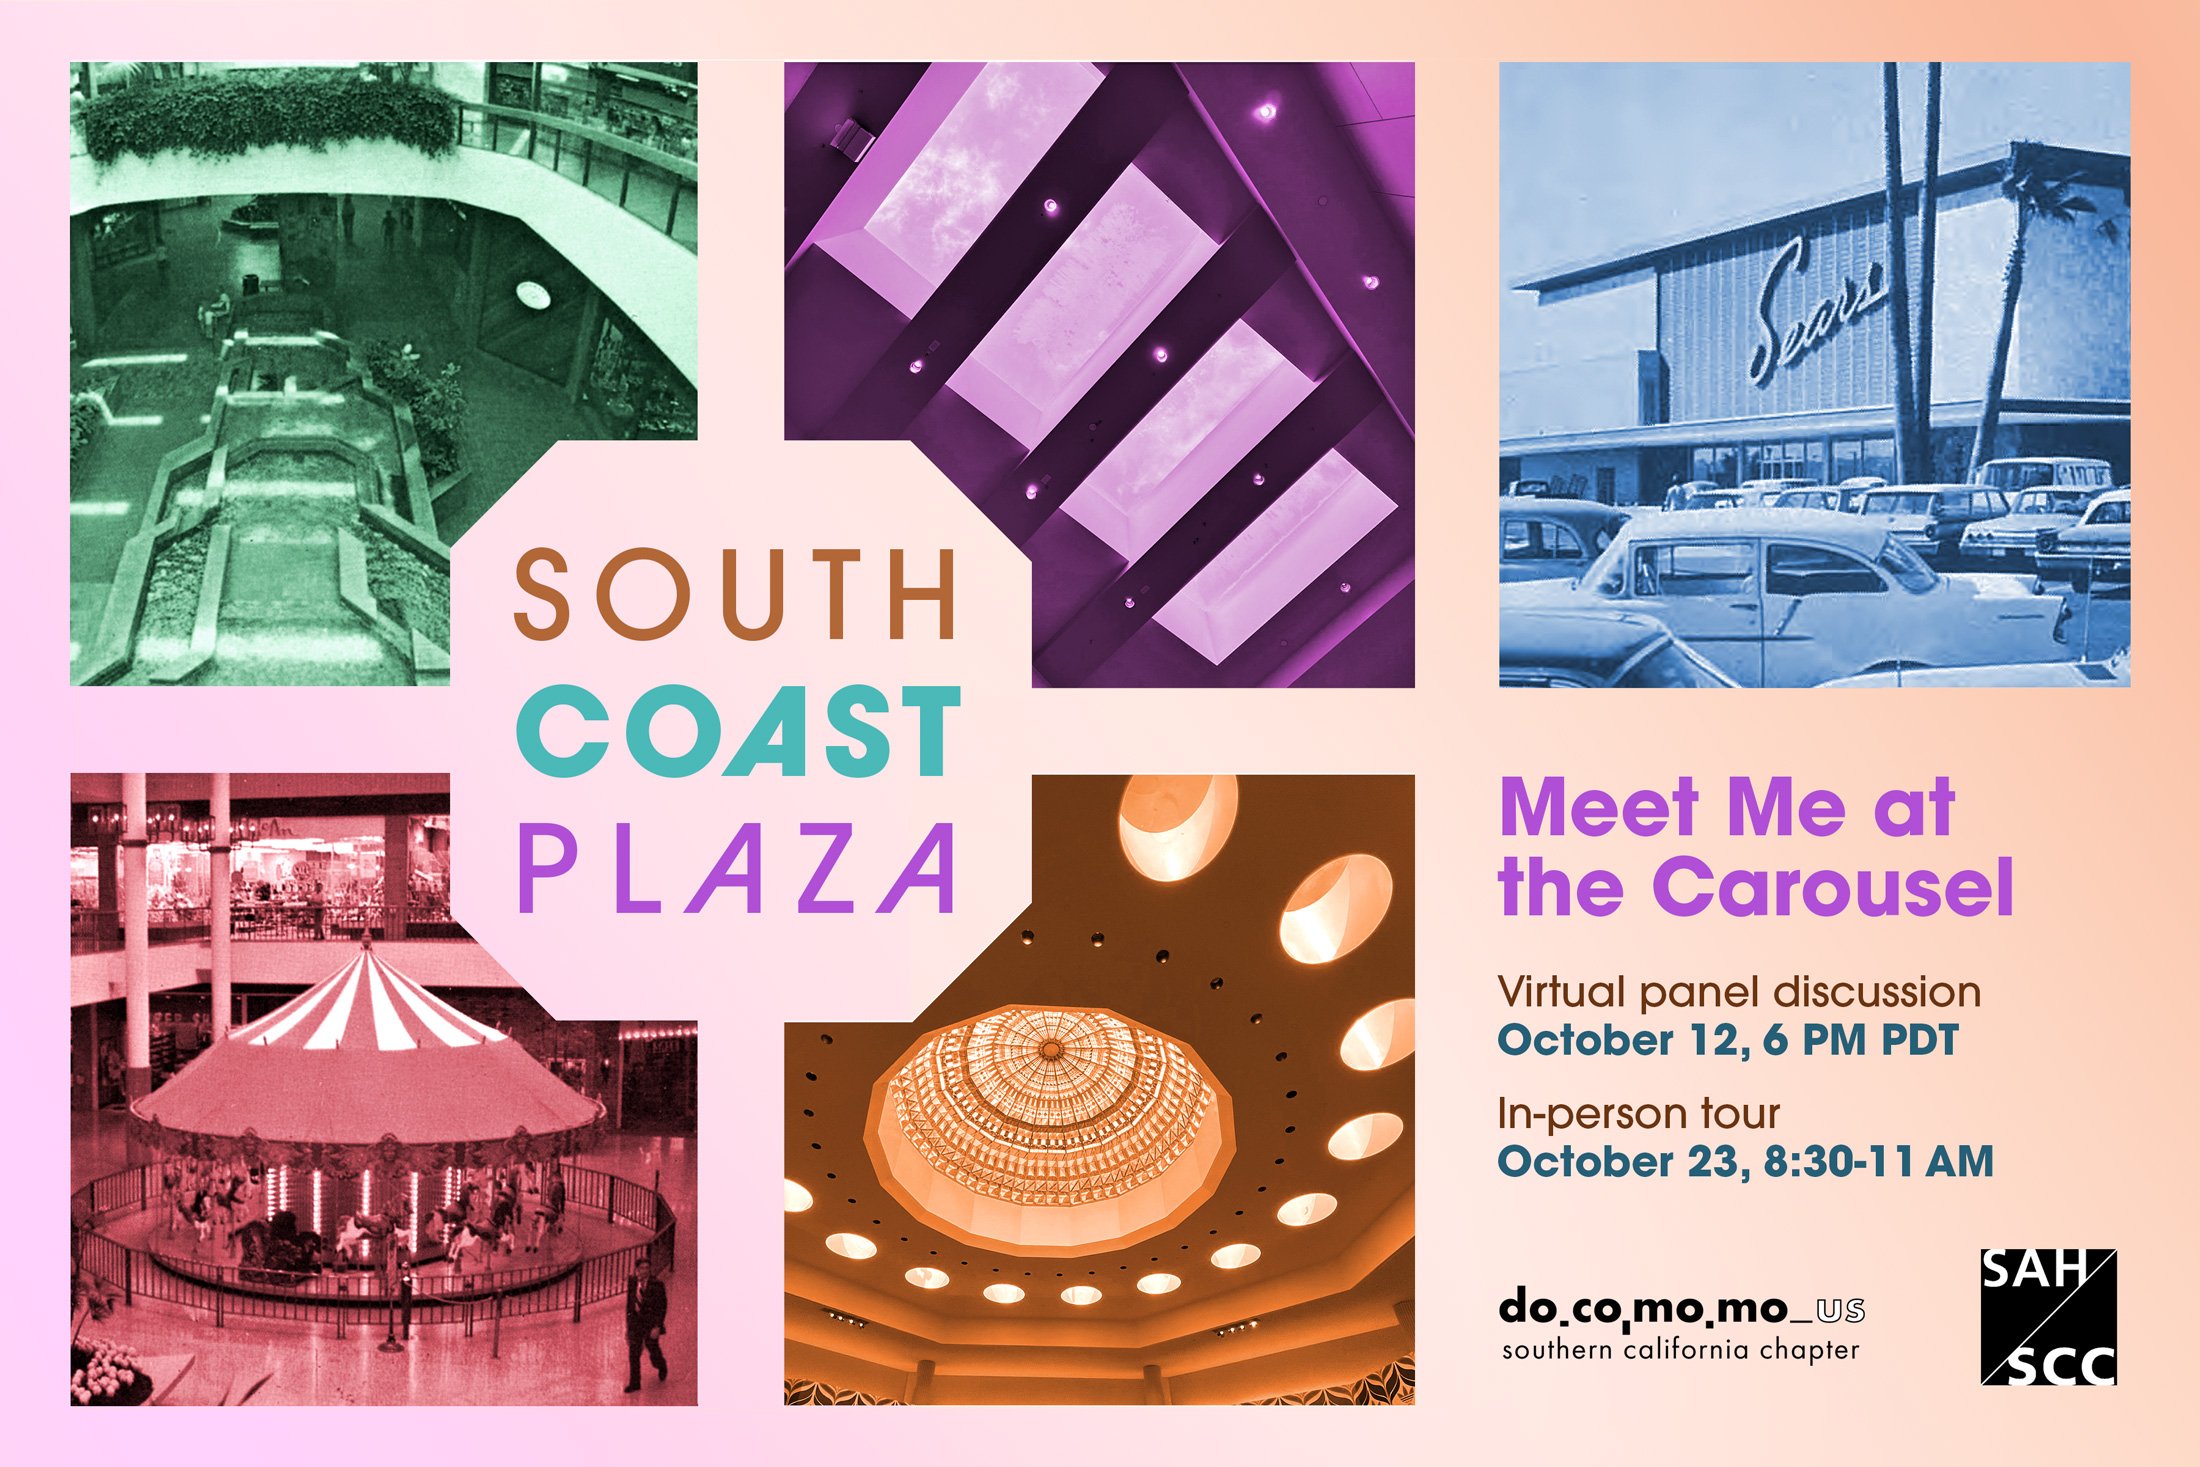 Meet Me at the Carousel: A Unique Tour of South Coast Plaza